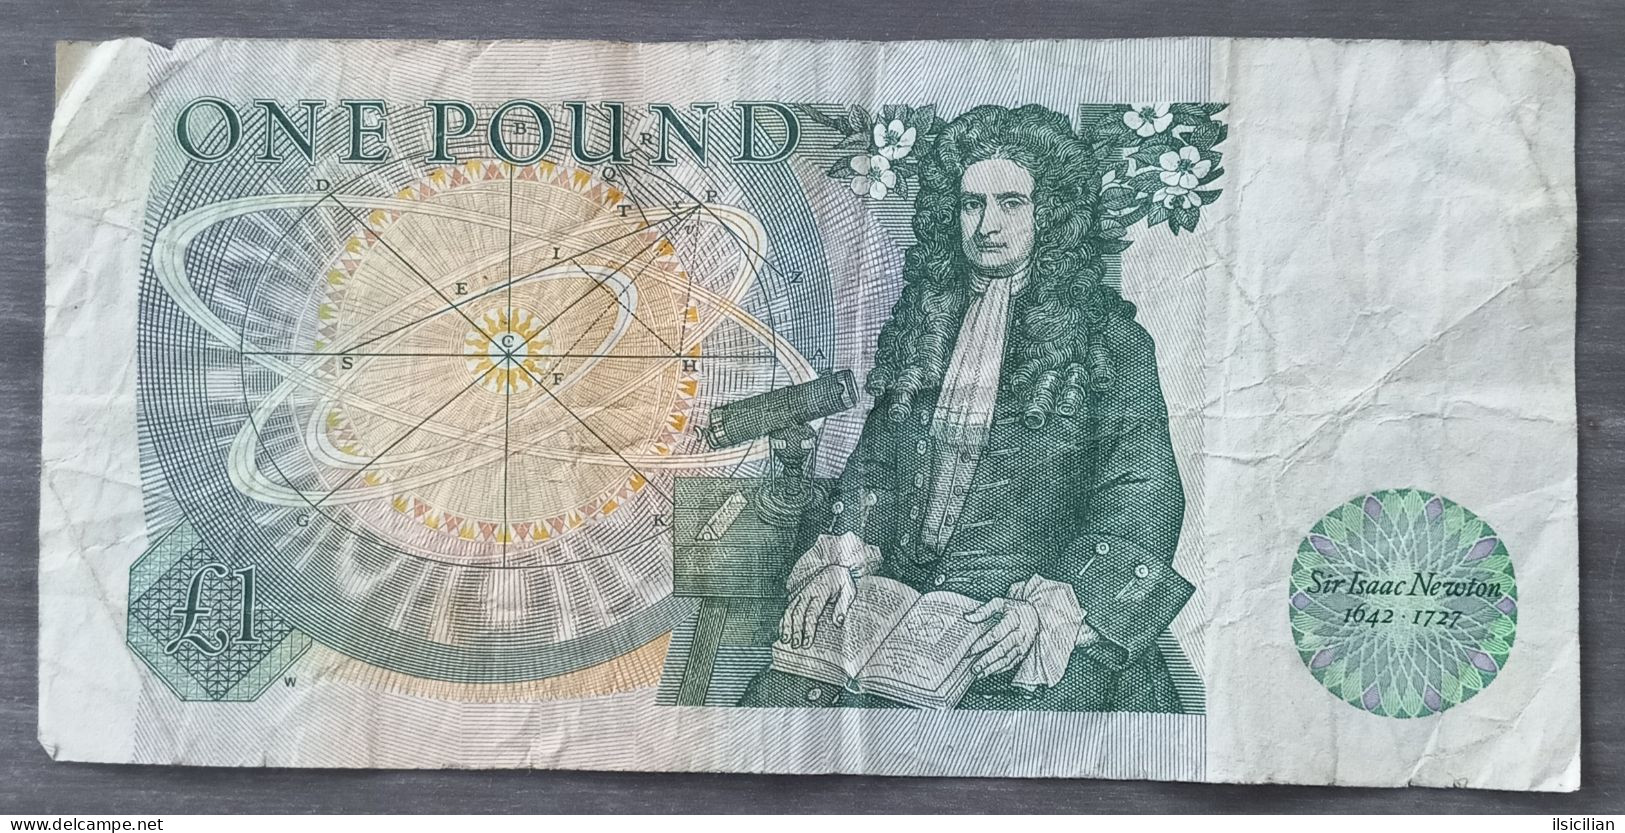 Billet 1 Pound 1981 Royaume-Uni - 1 Pound